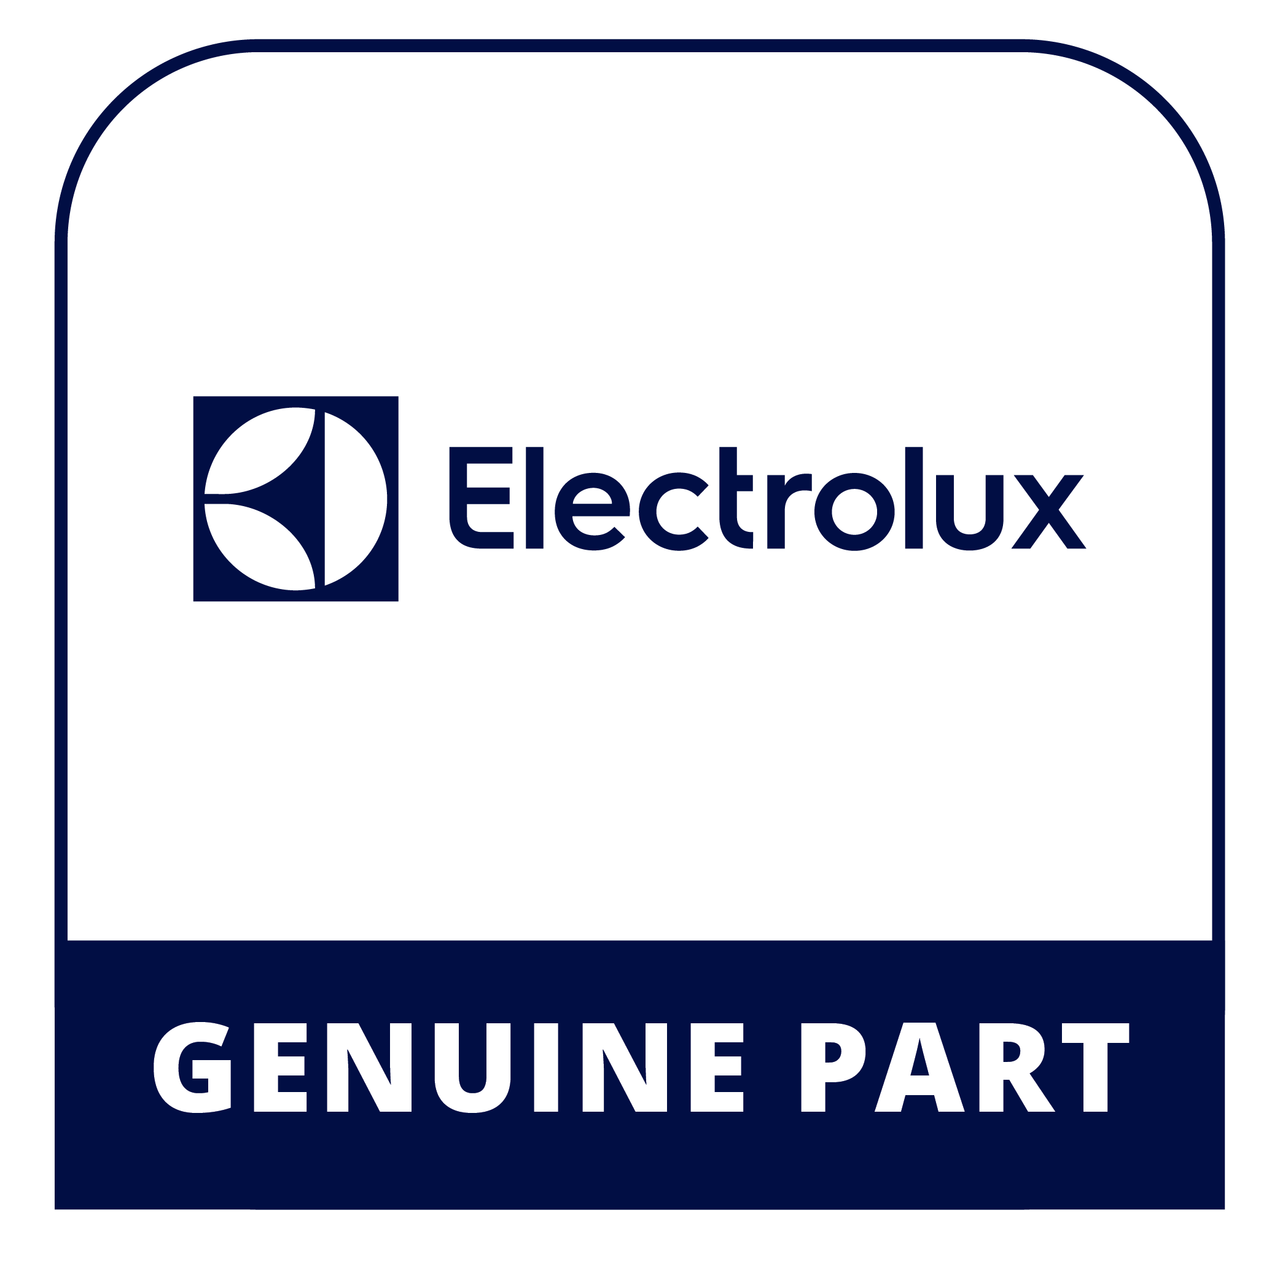 Frigidaire - Electrolux 5304524643 Closer Assembly - Genuine Electrolux Part